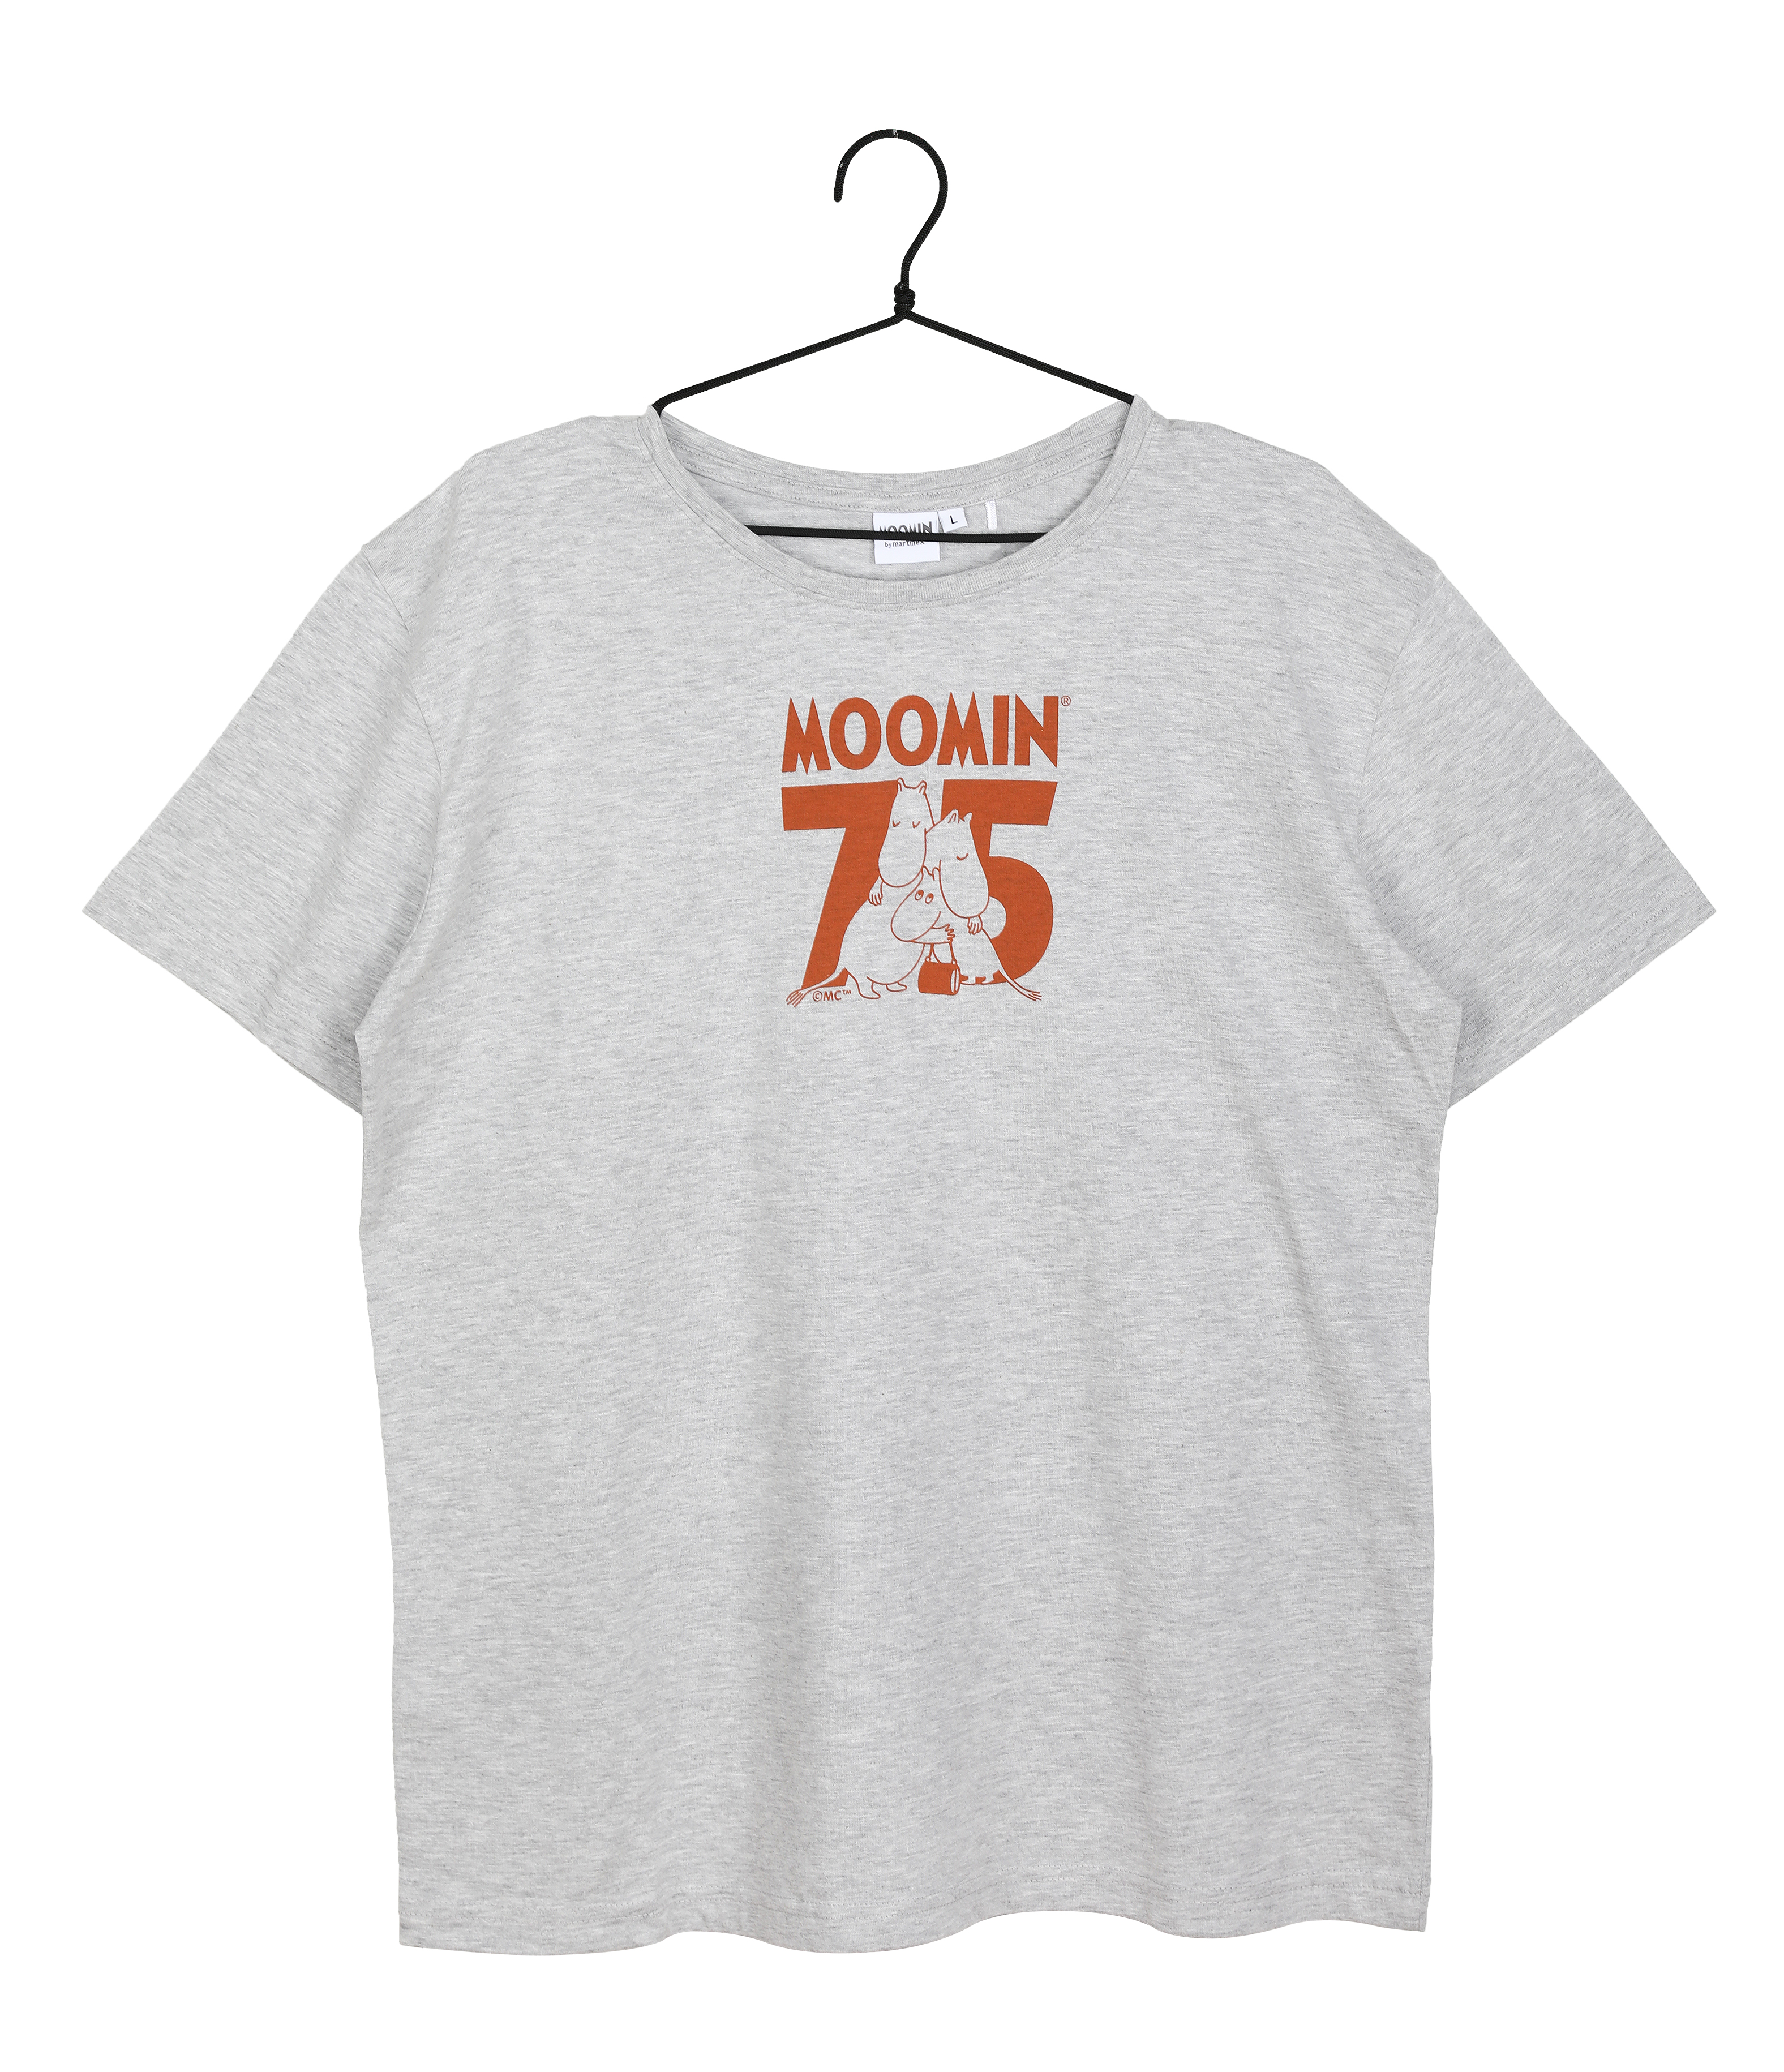 Martinex Moomin 75 T-shirt Grey